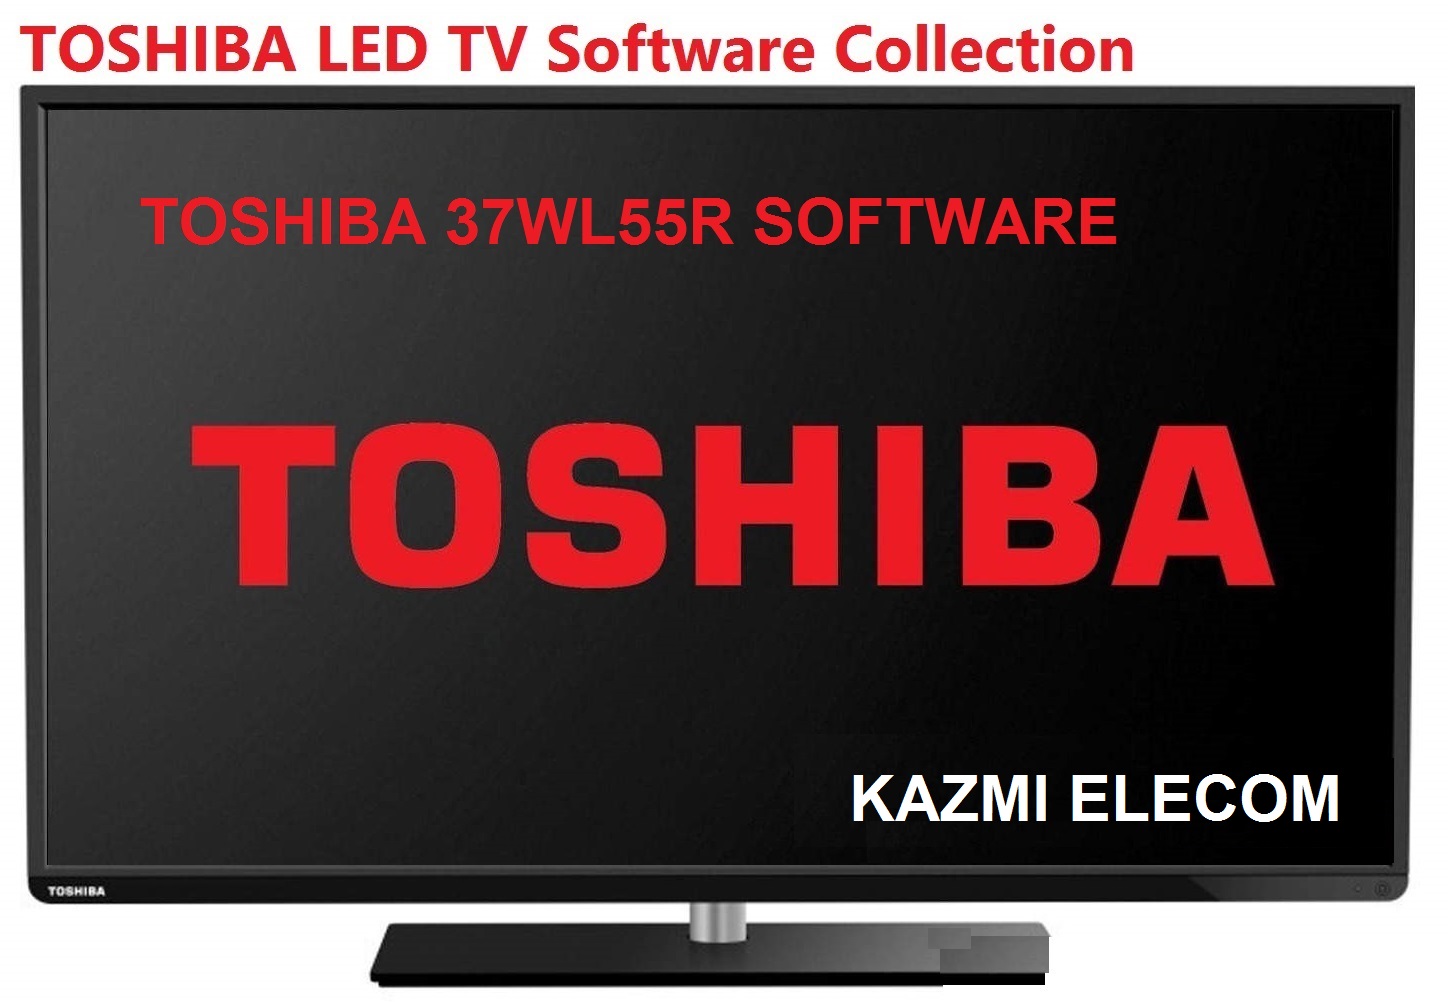 Toshiba 37Wl55R